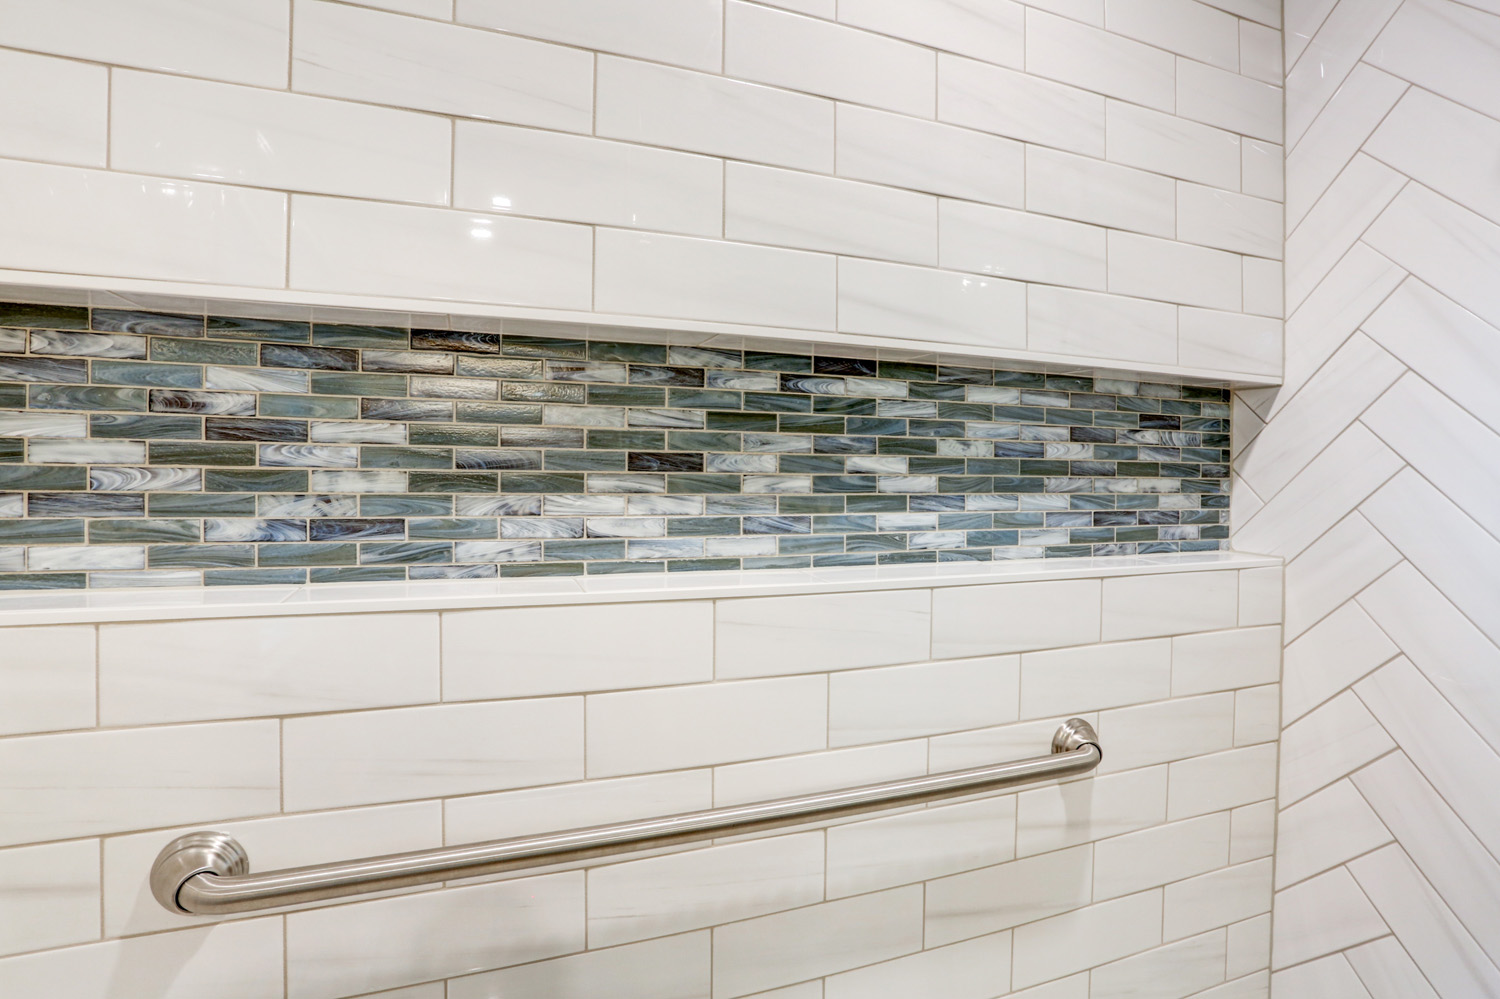 Tile Shower Niche with Grab Bar in Conestoga Valley Master Bathroom Remodel